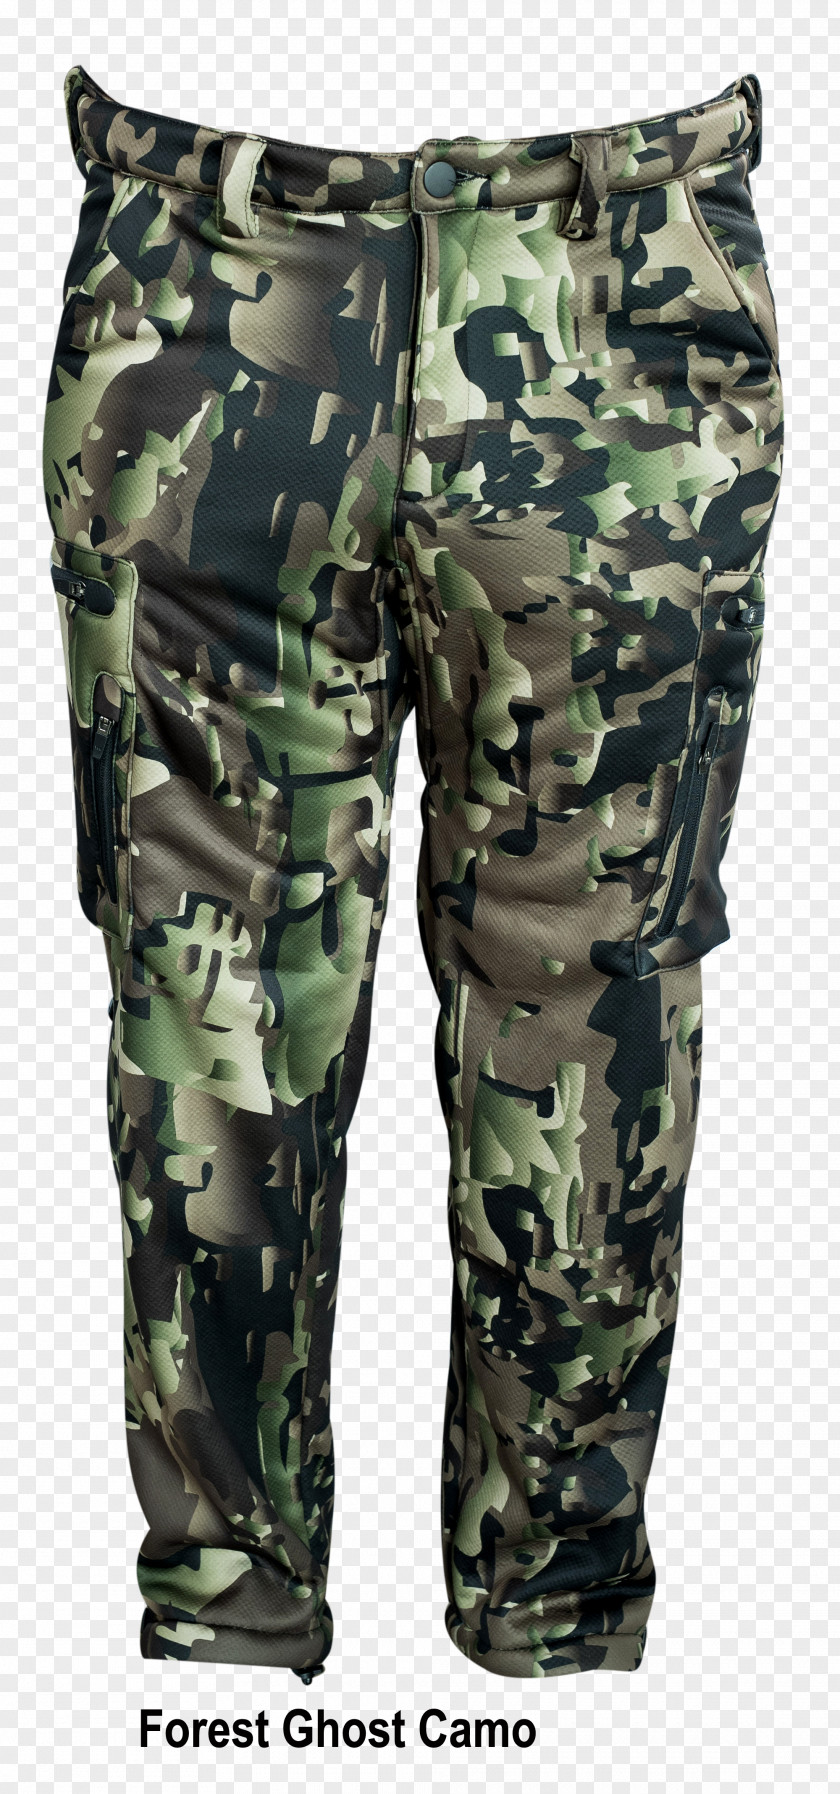 Zgmfx20a Strike Freedom Military Camouflage Cargo Pants Khaki Clothing PNG